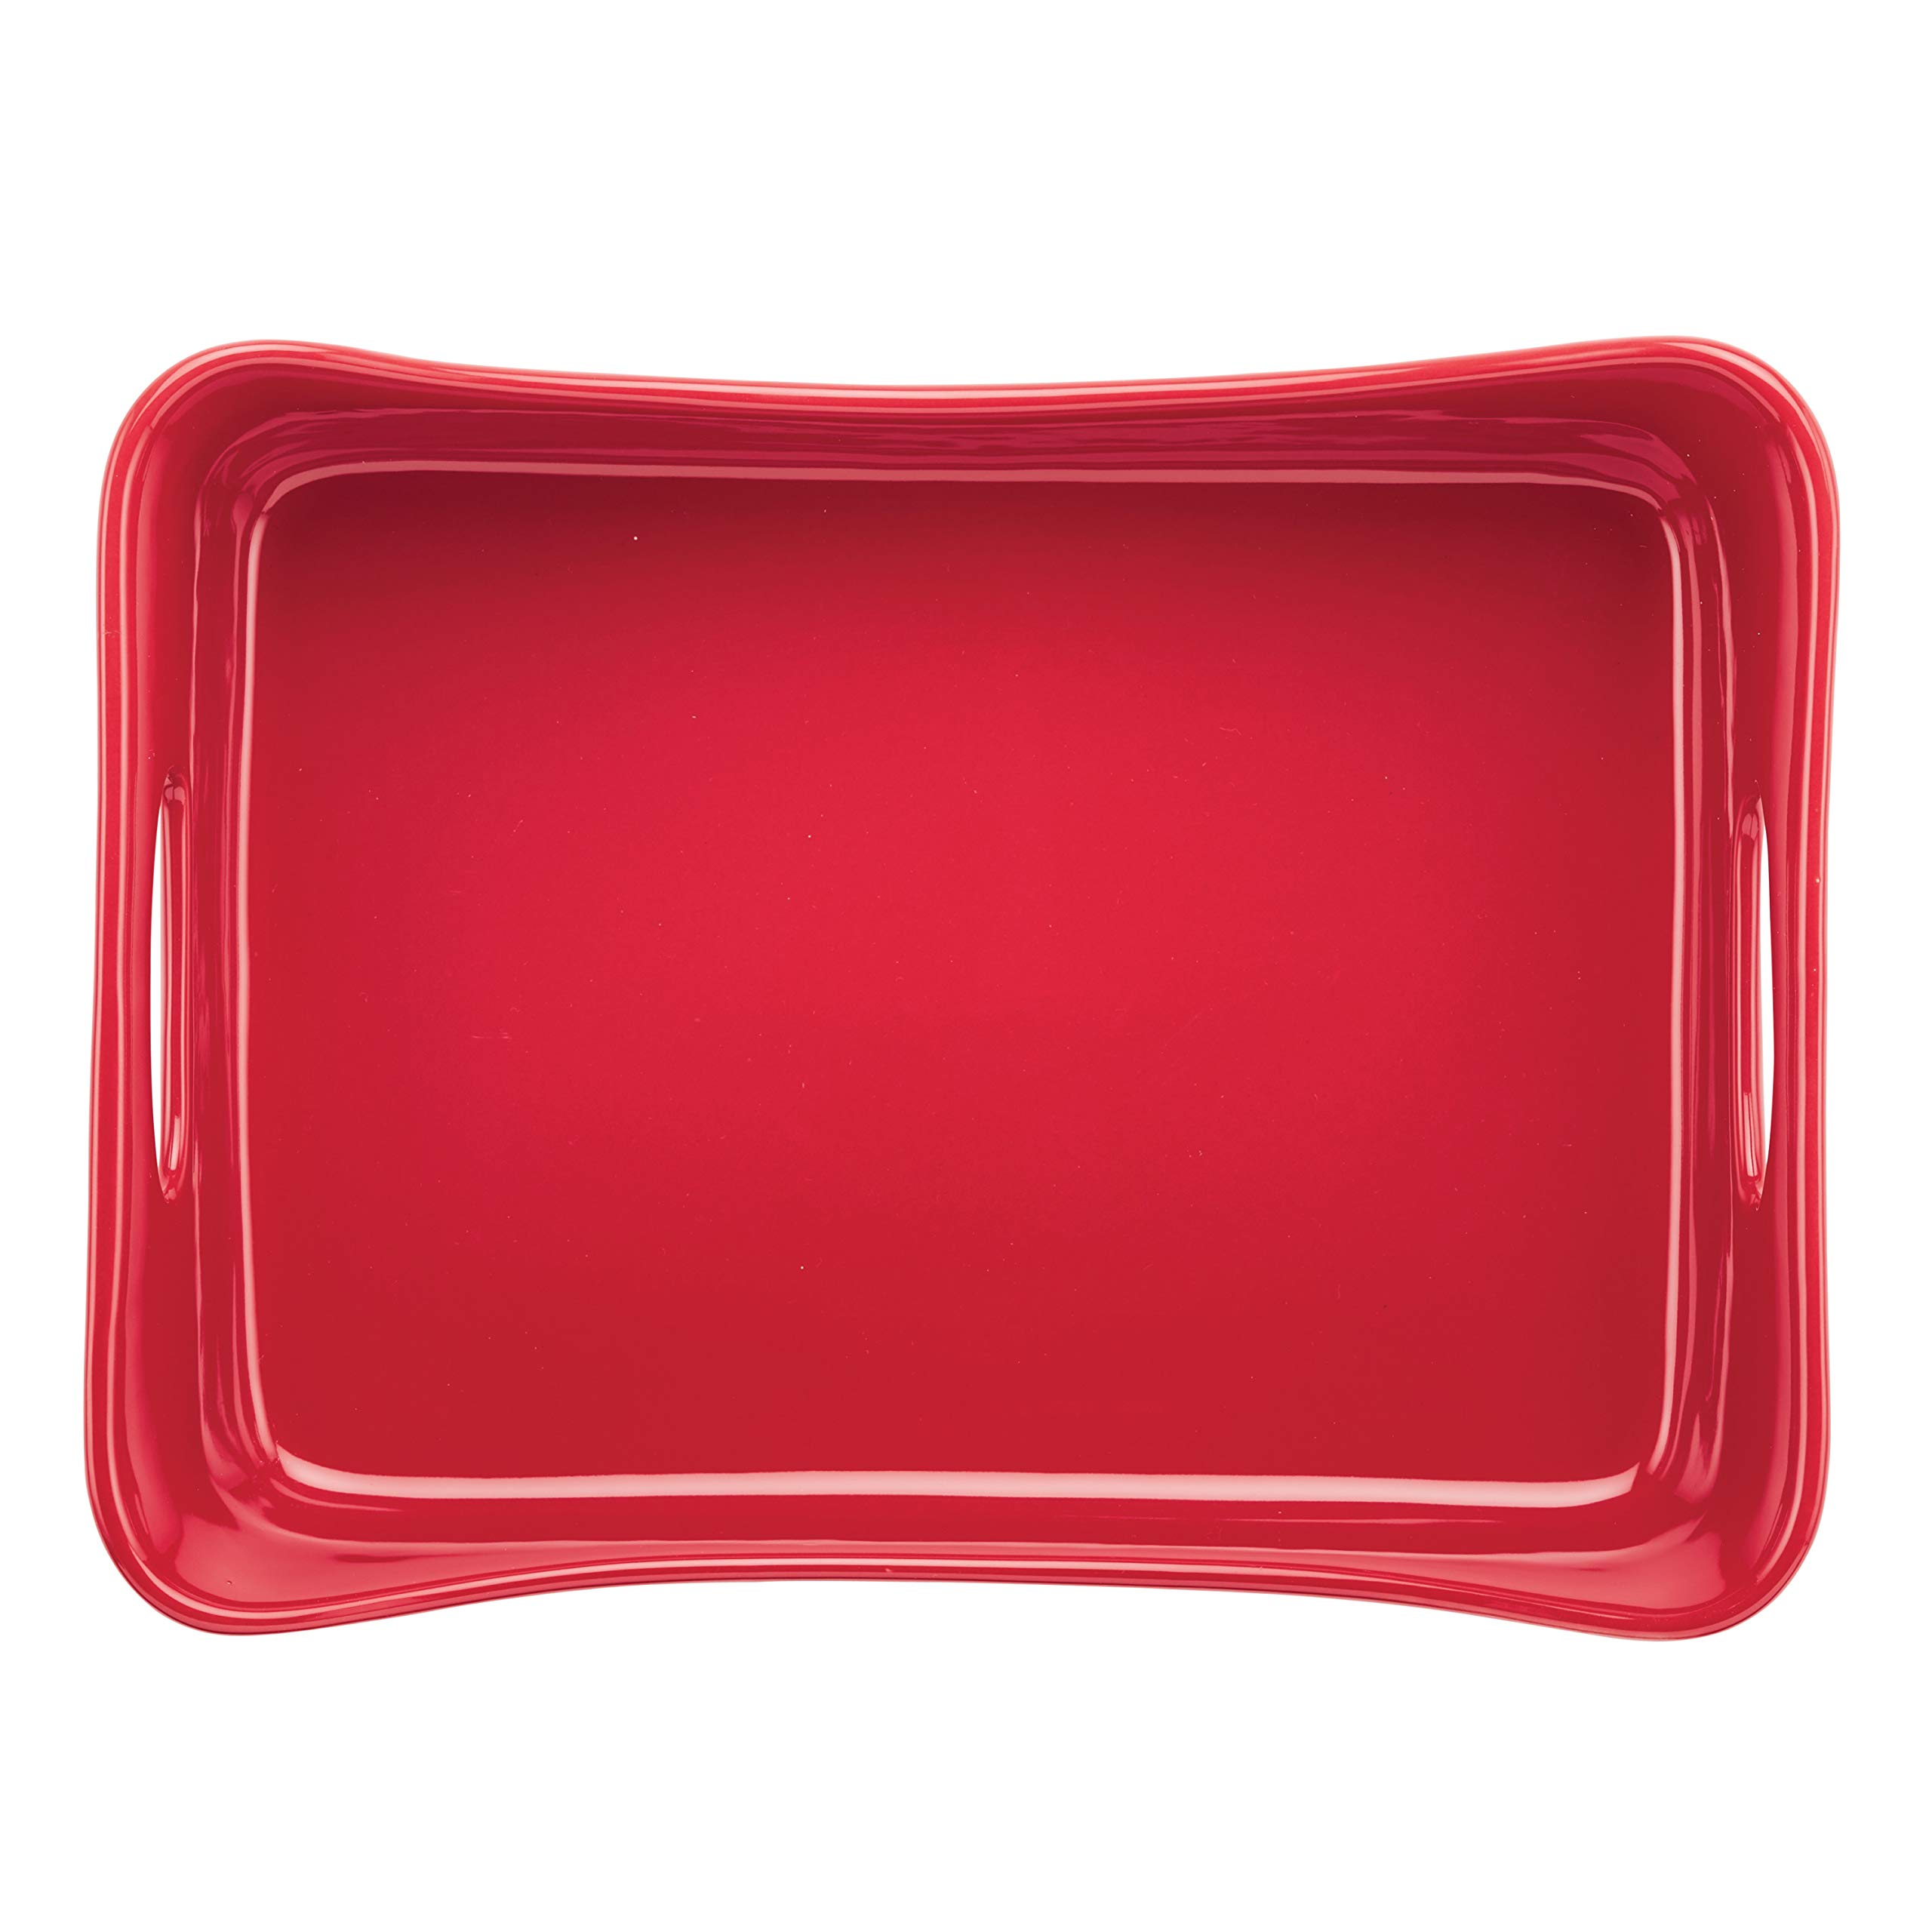 Rachael Ray Solid Glaze Ceramics Bakeware / Lasagna Pan / Baker, Rectangle - 9 Inch x 12 Inch, Red